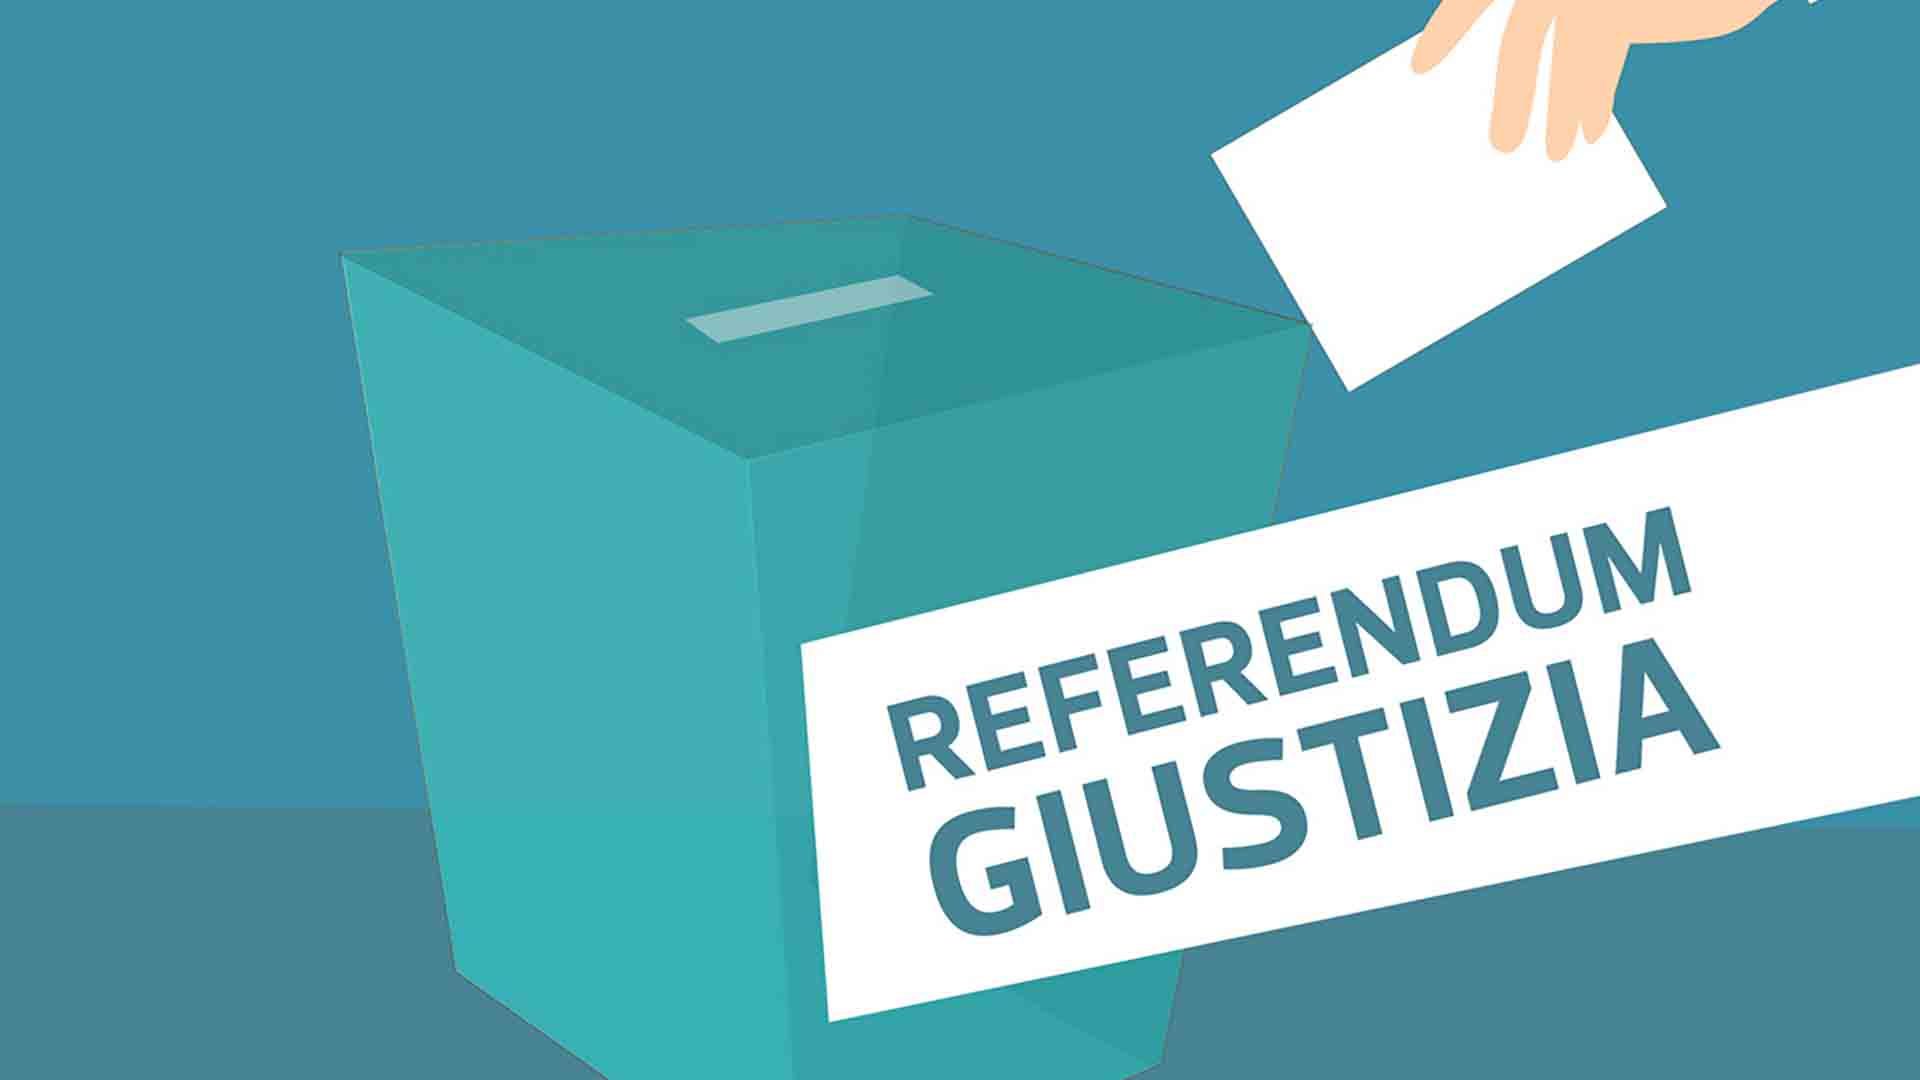 referendum-1